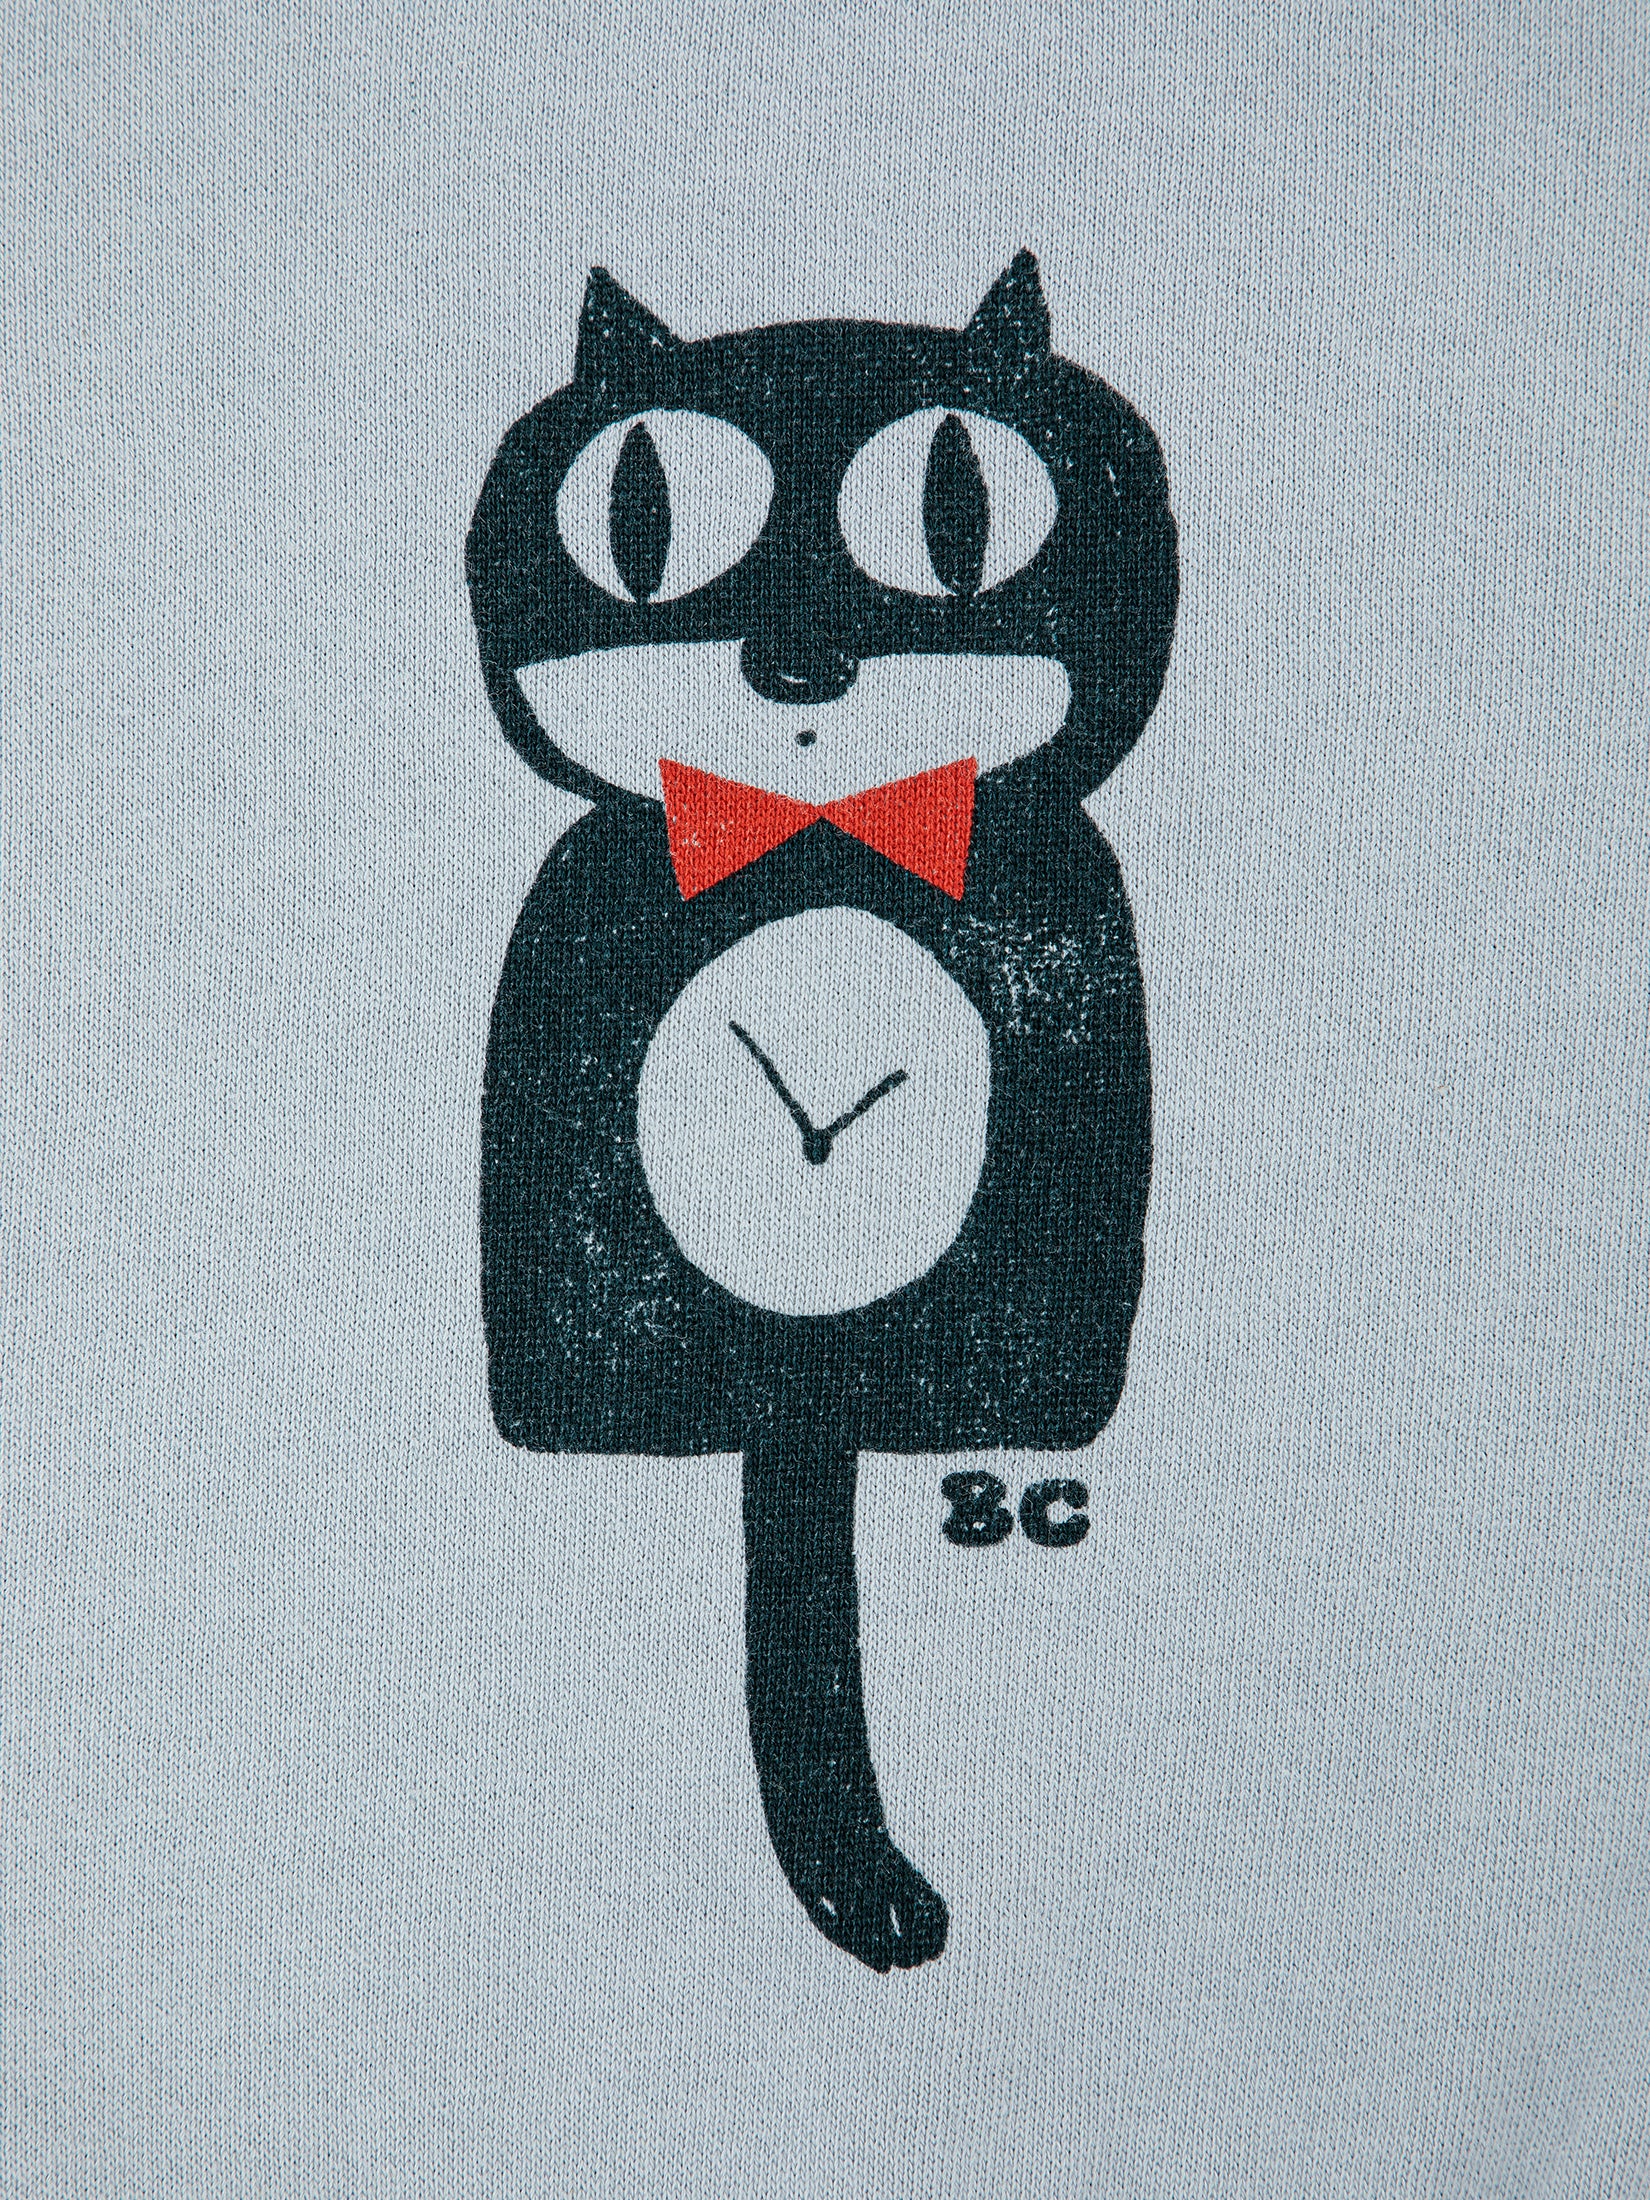 Bobo Choses Baby Sweatshirt - Cat O'Clock